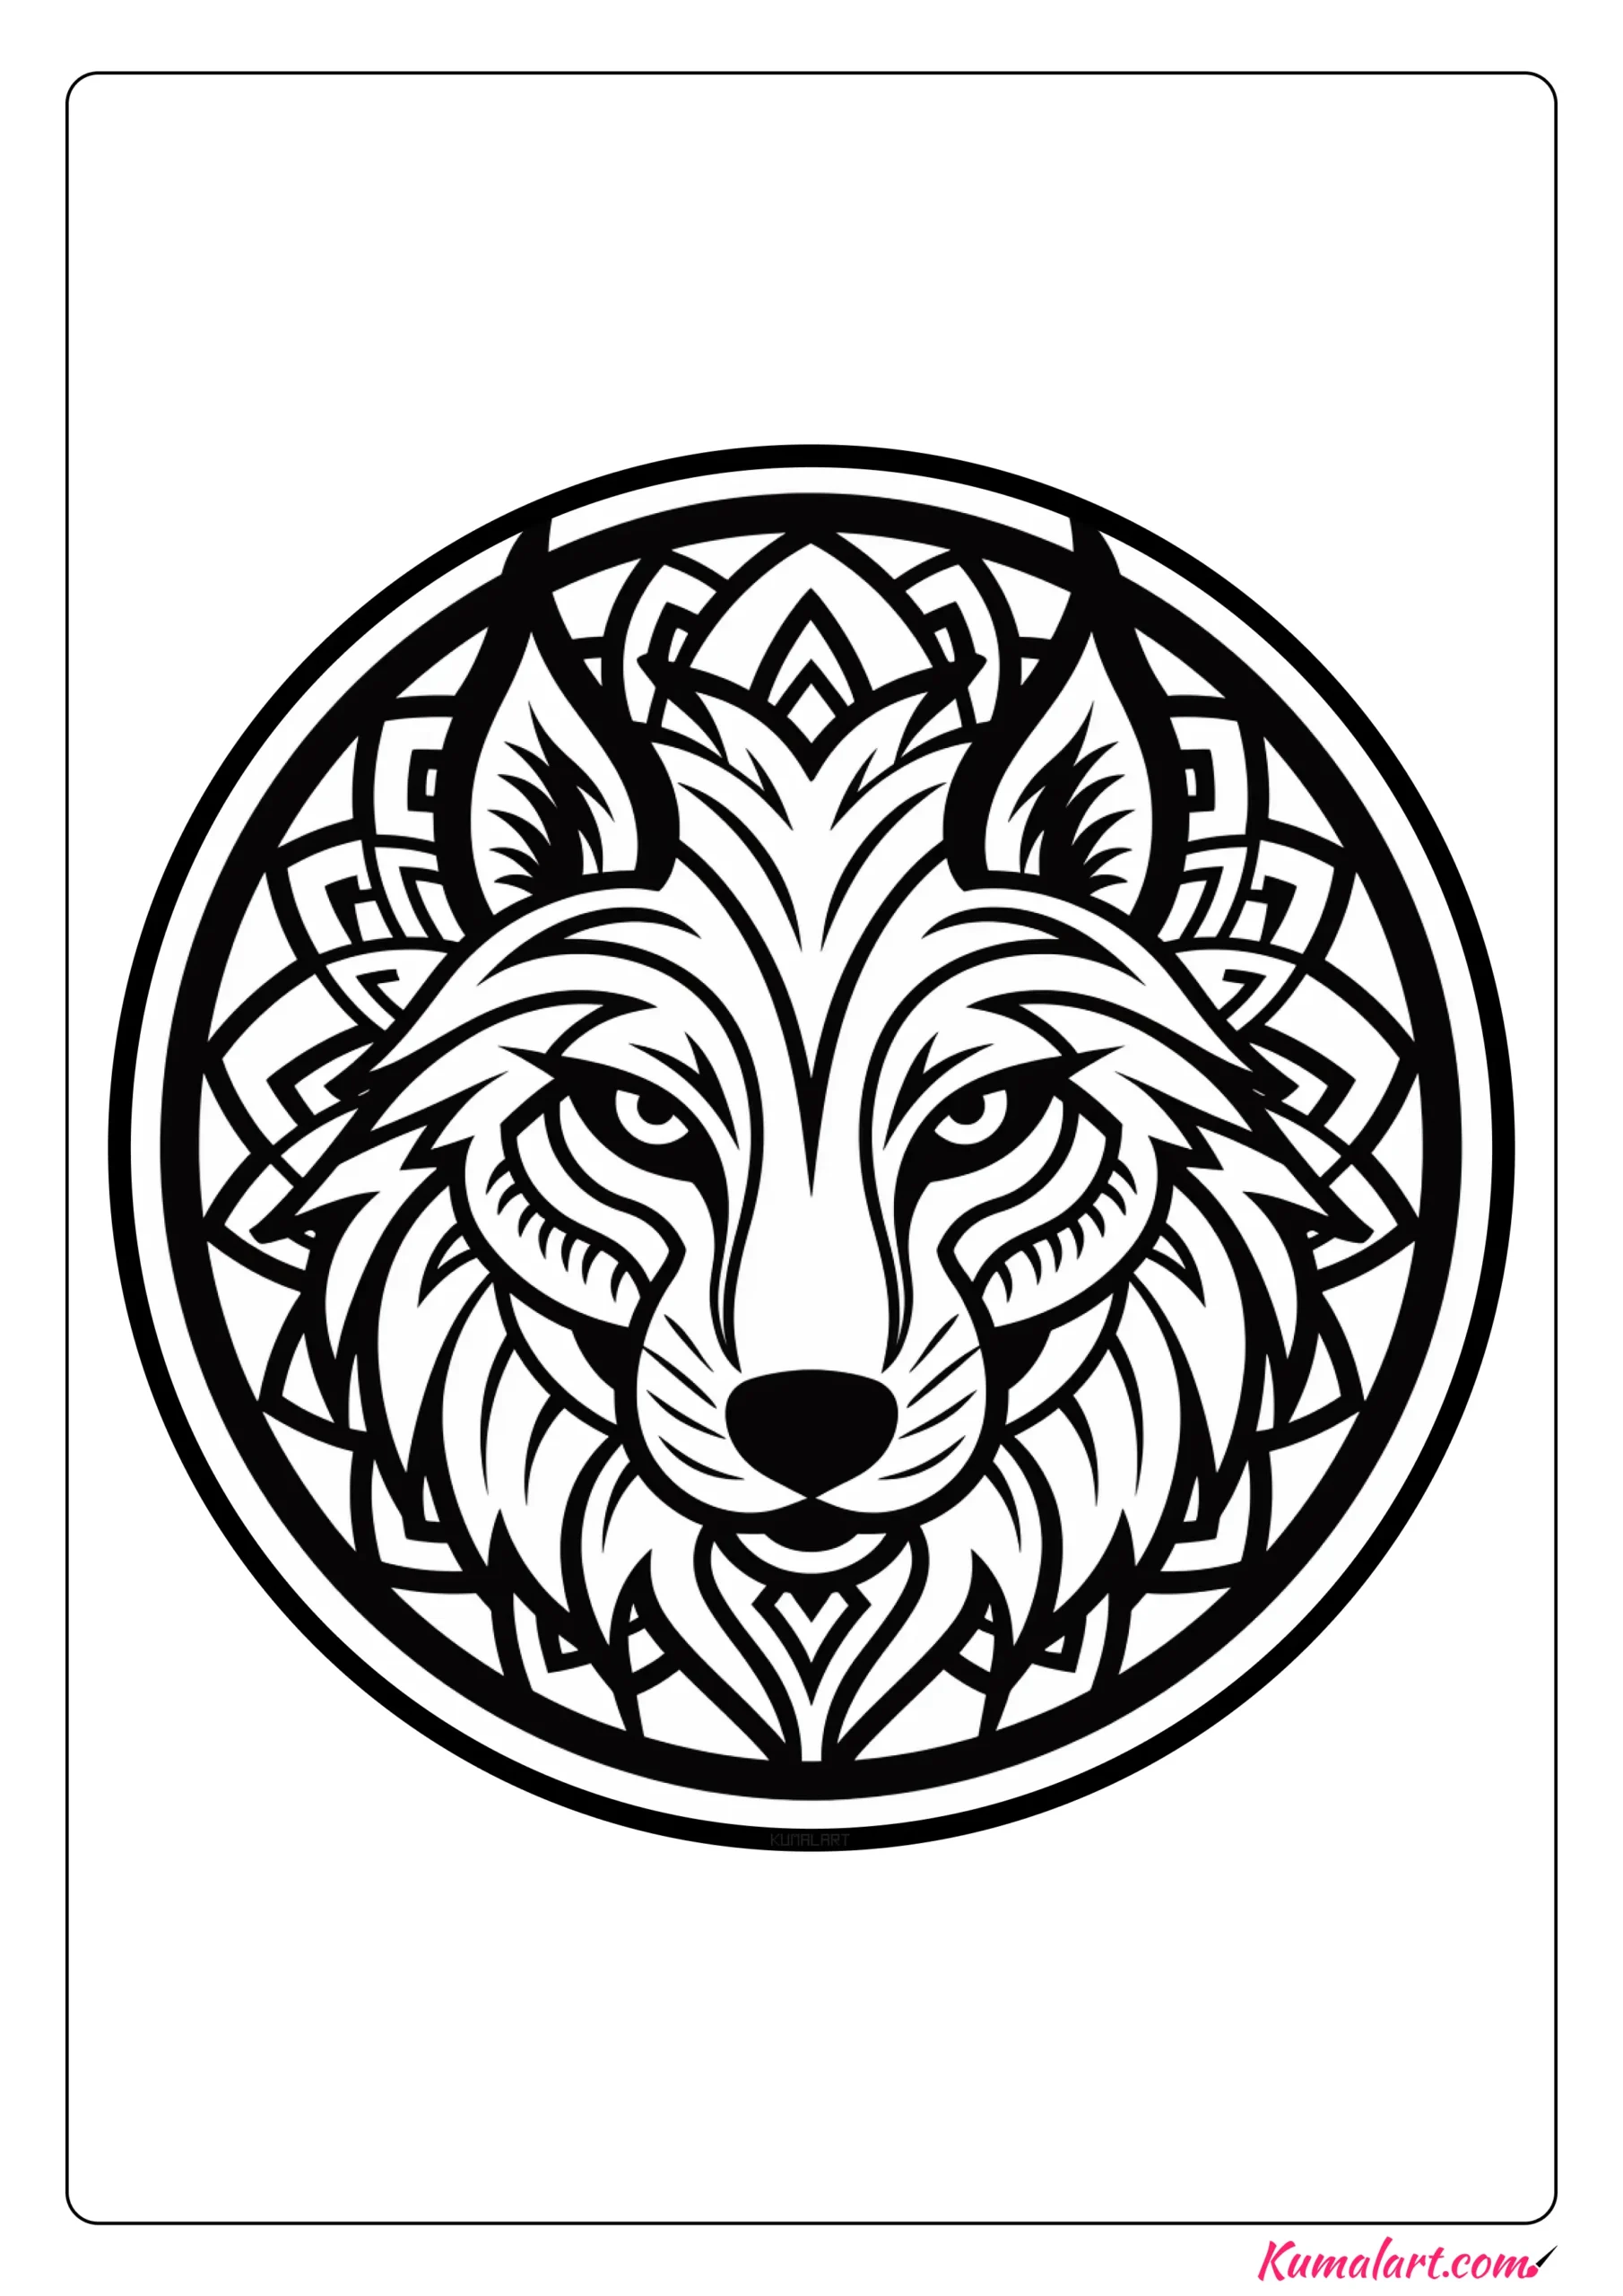 Alan the Wolf Mandala Coloring Page